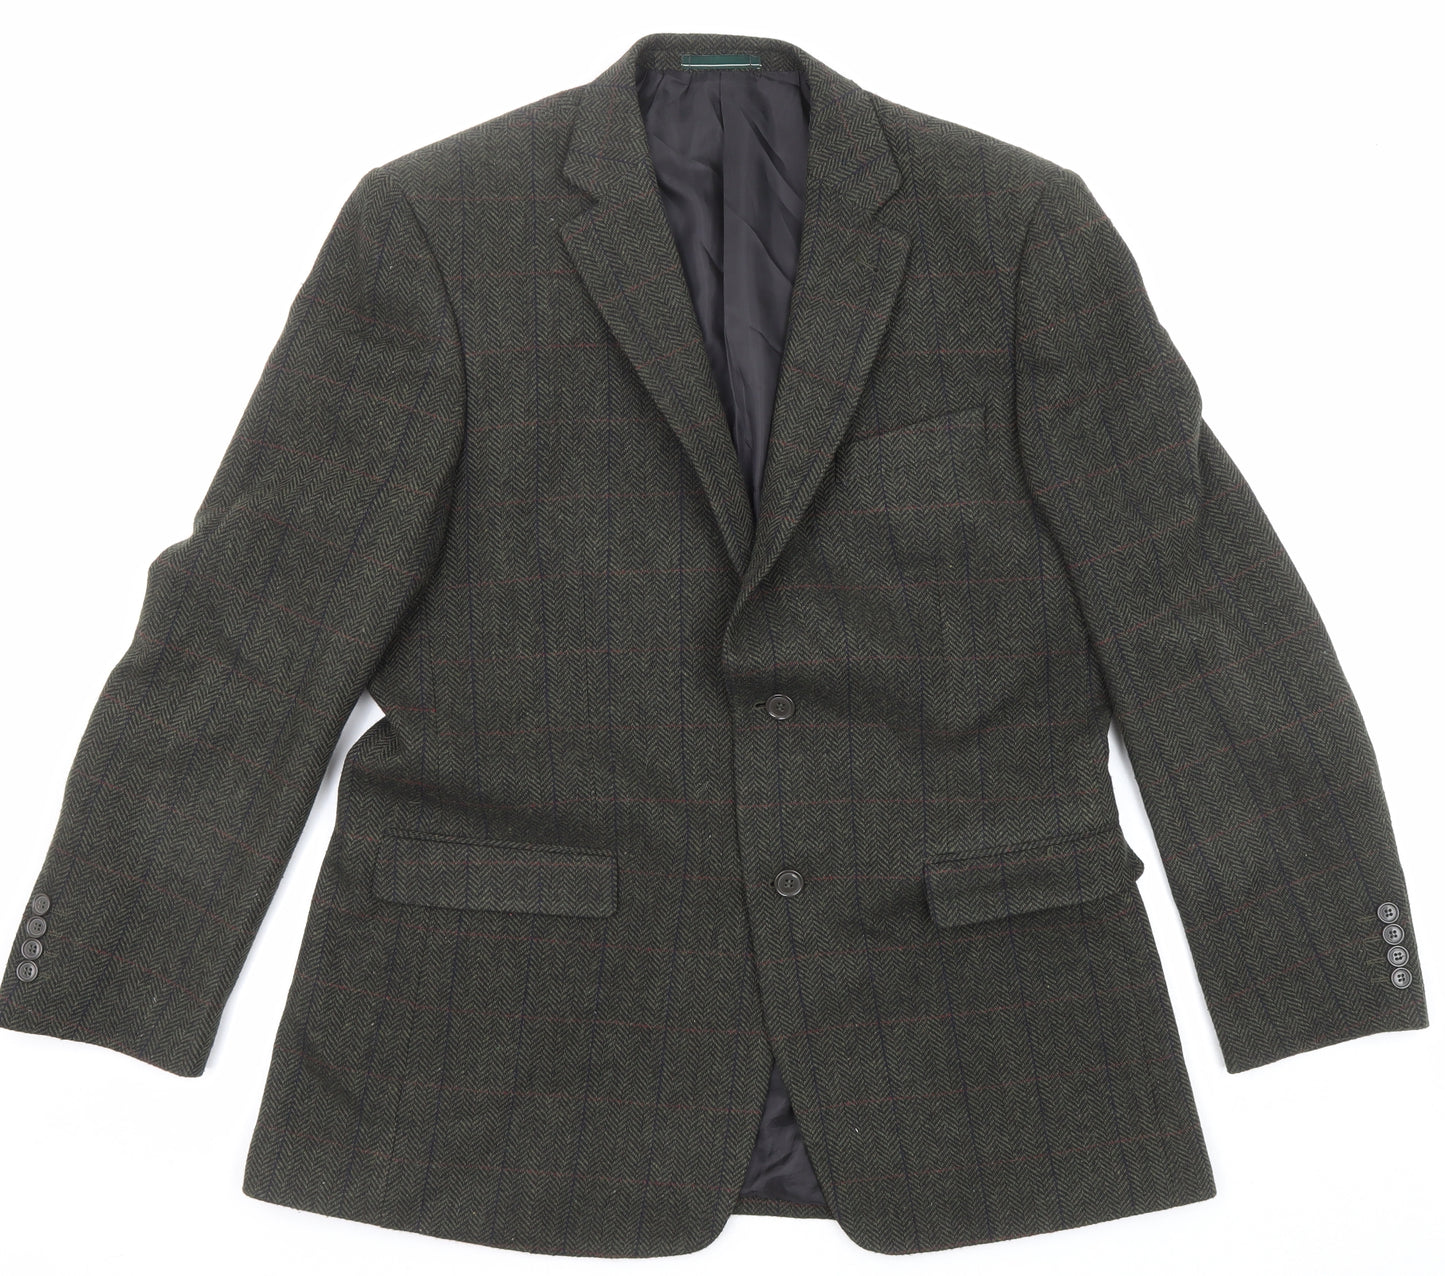 Greenwoods Mens Green Herringbone Polyester Jacket Blazer Size 42 Regular